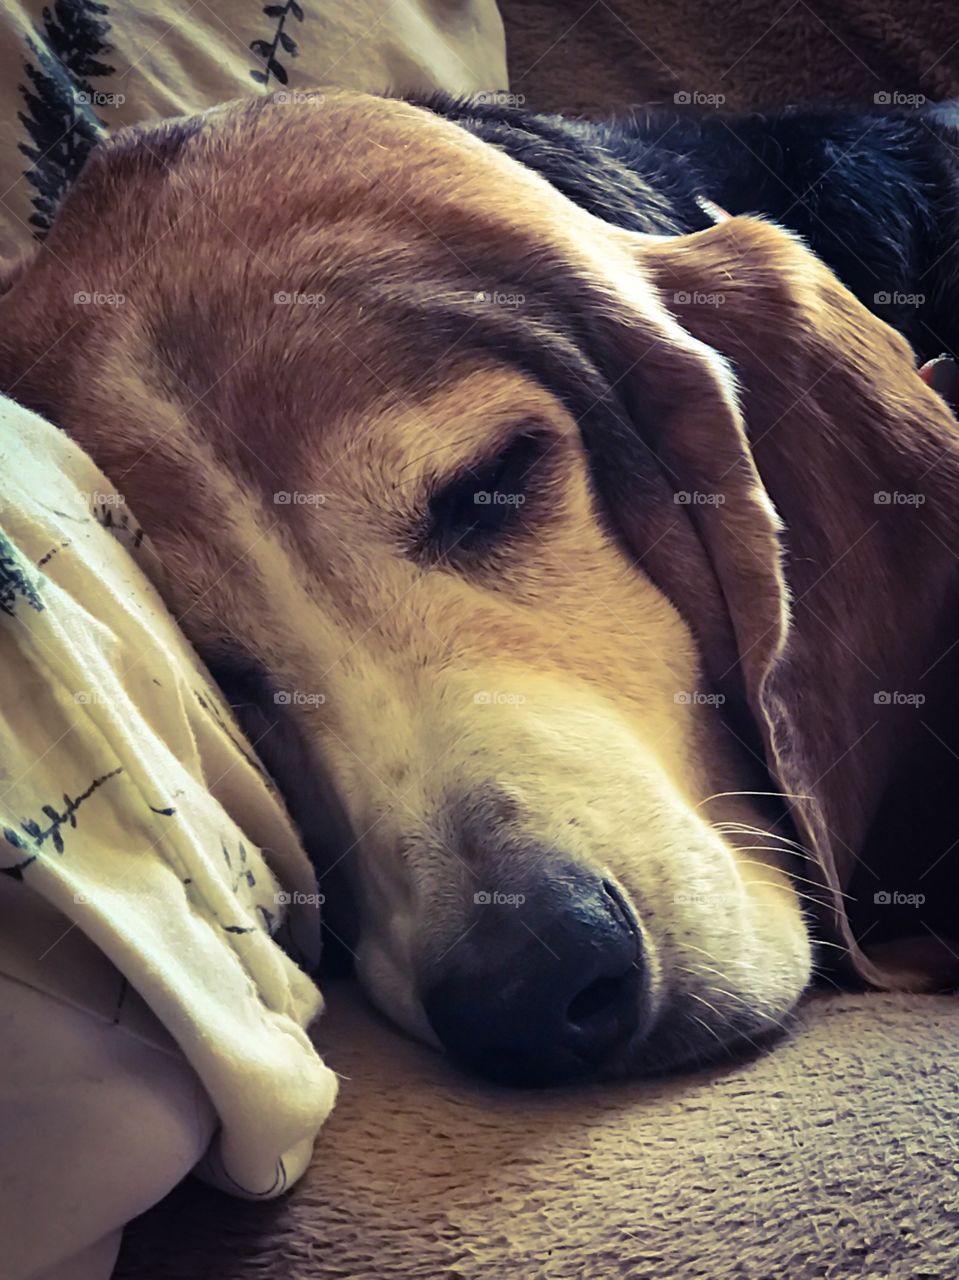 My hound snoozing